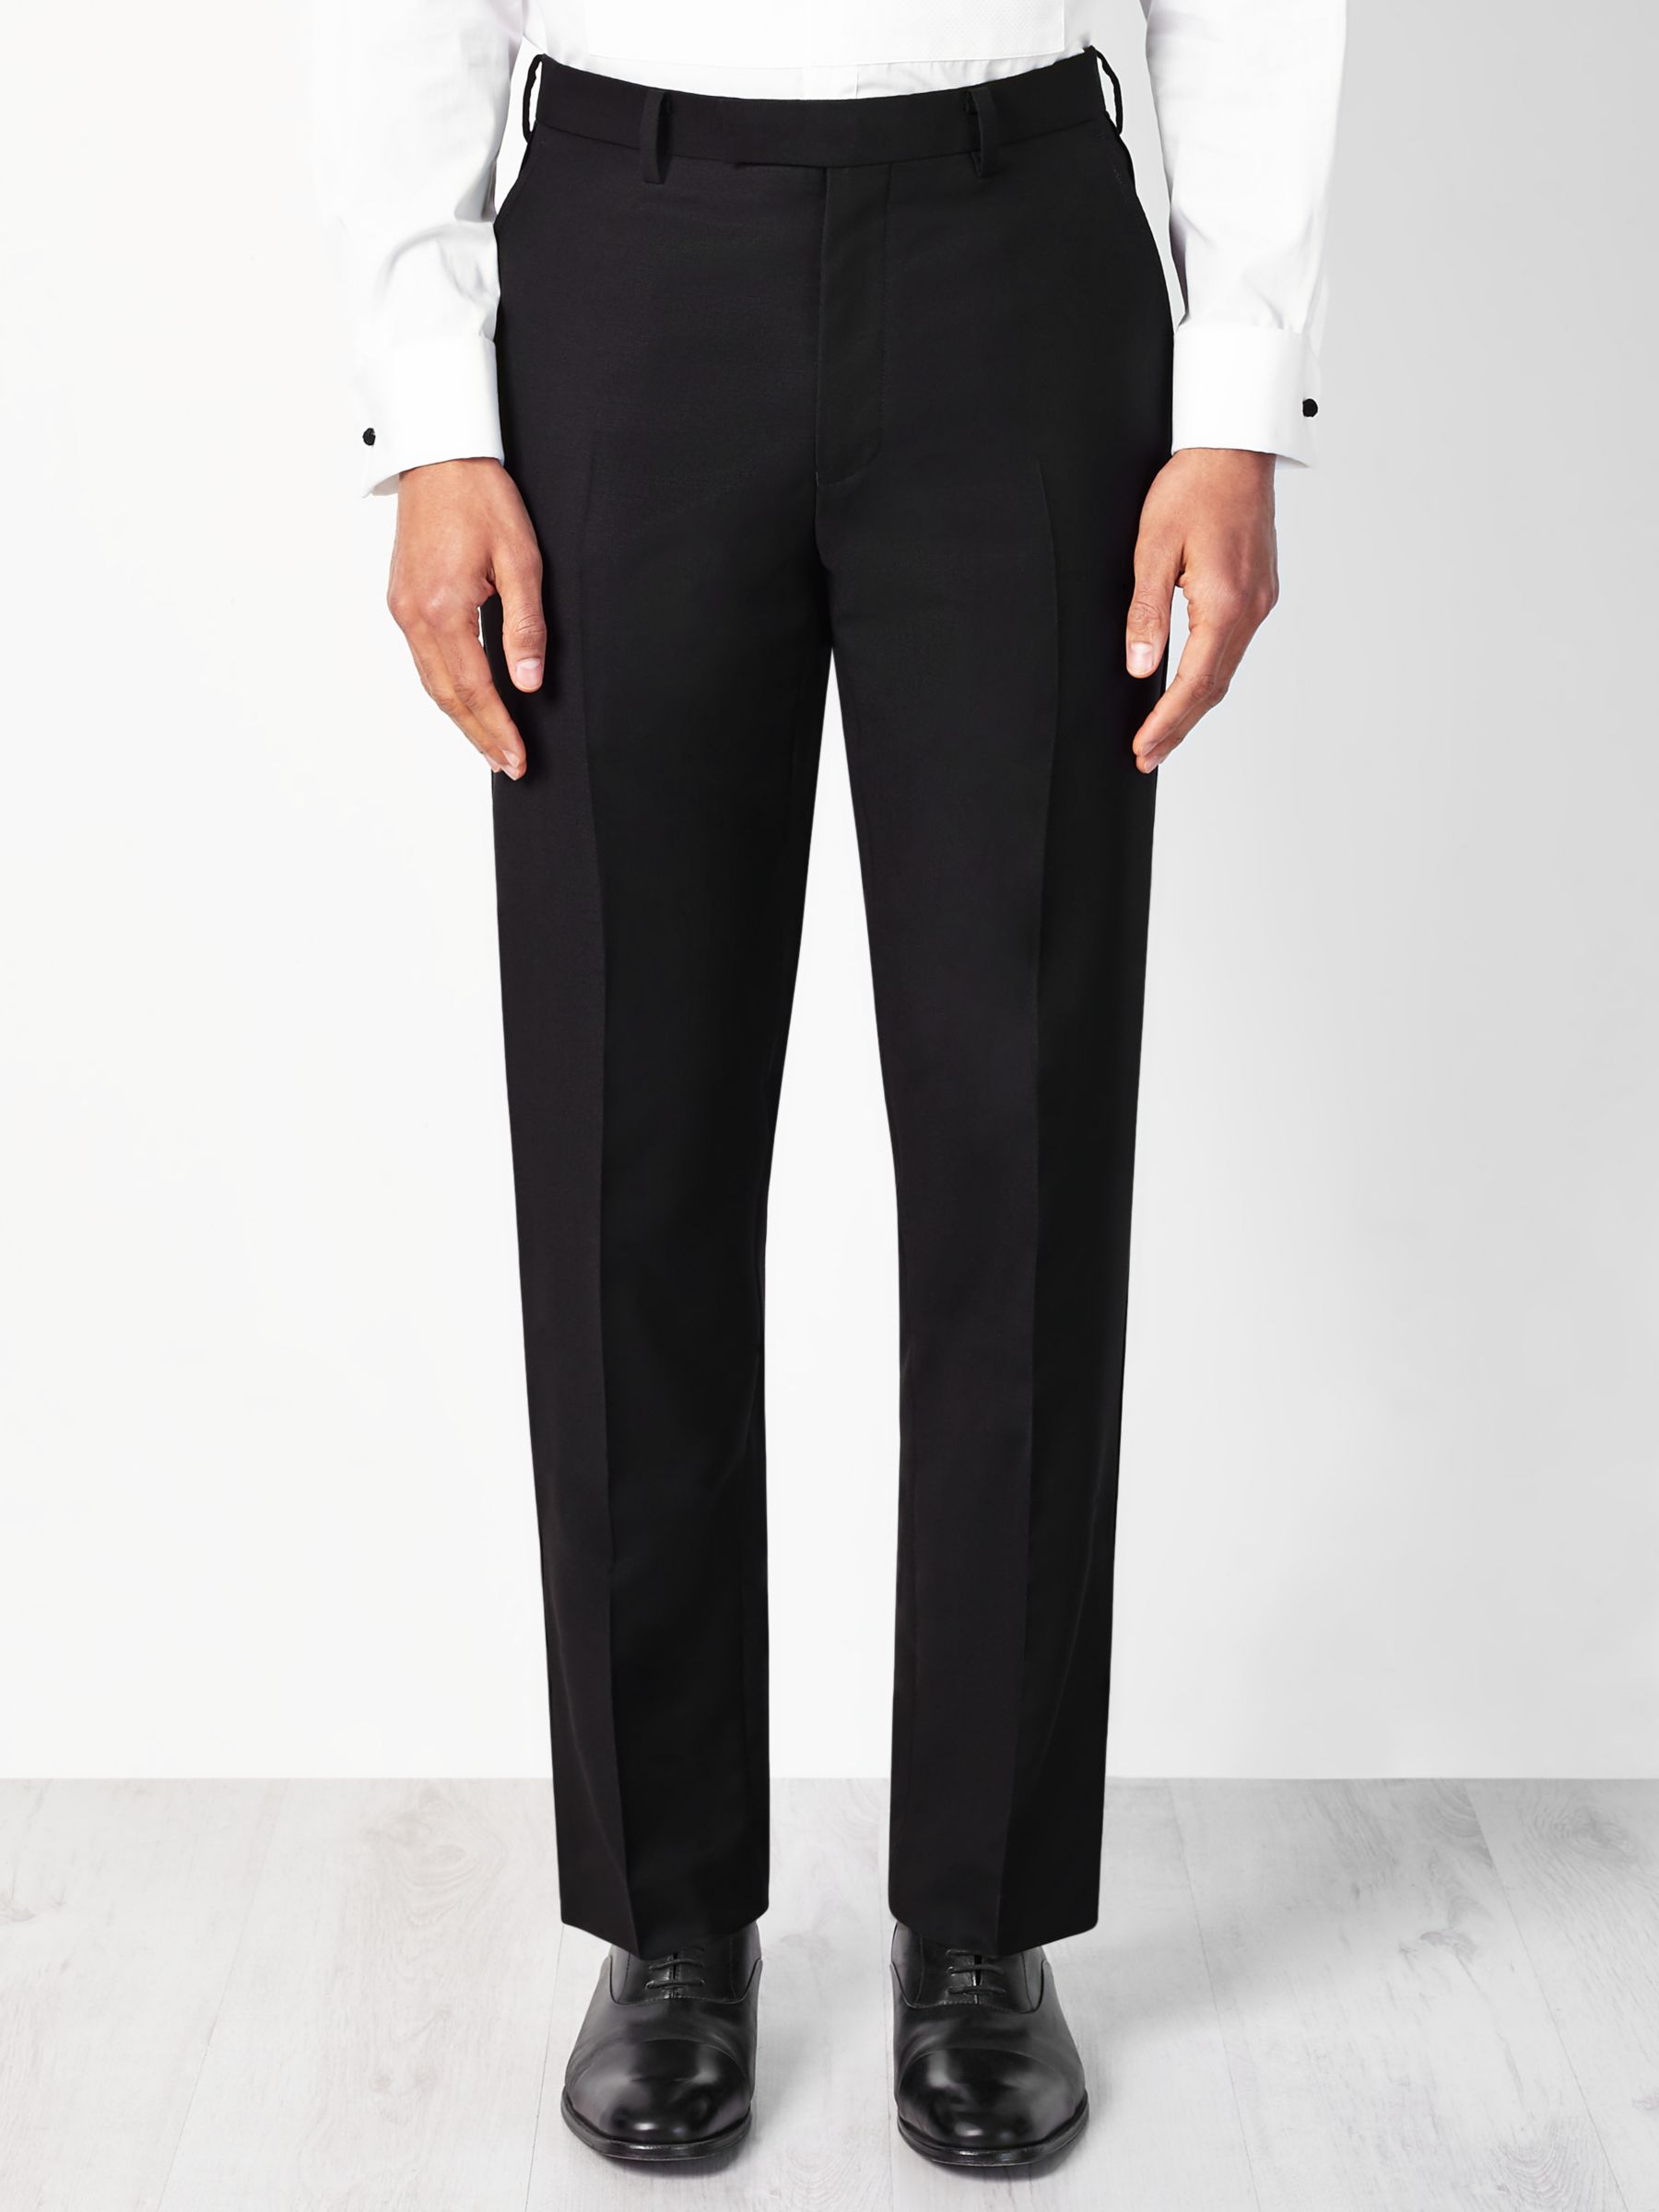 John Lewis & Partners Basket Weave Dress Suit Trousers, Black, Regular ...